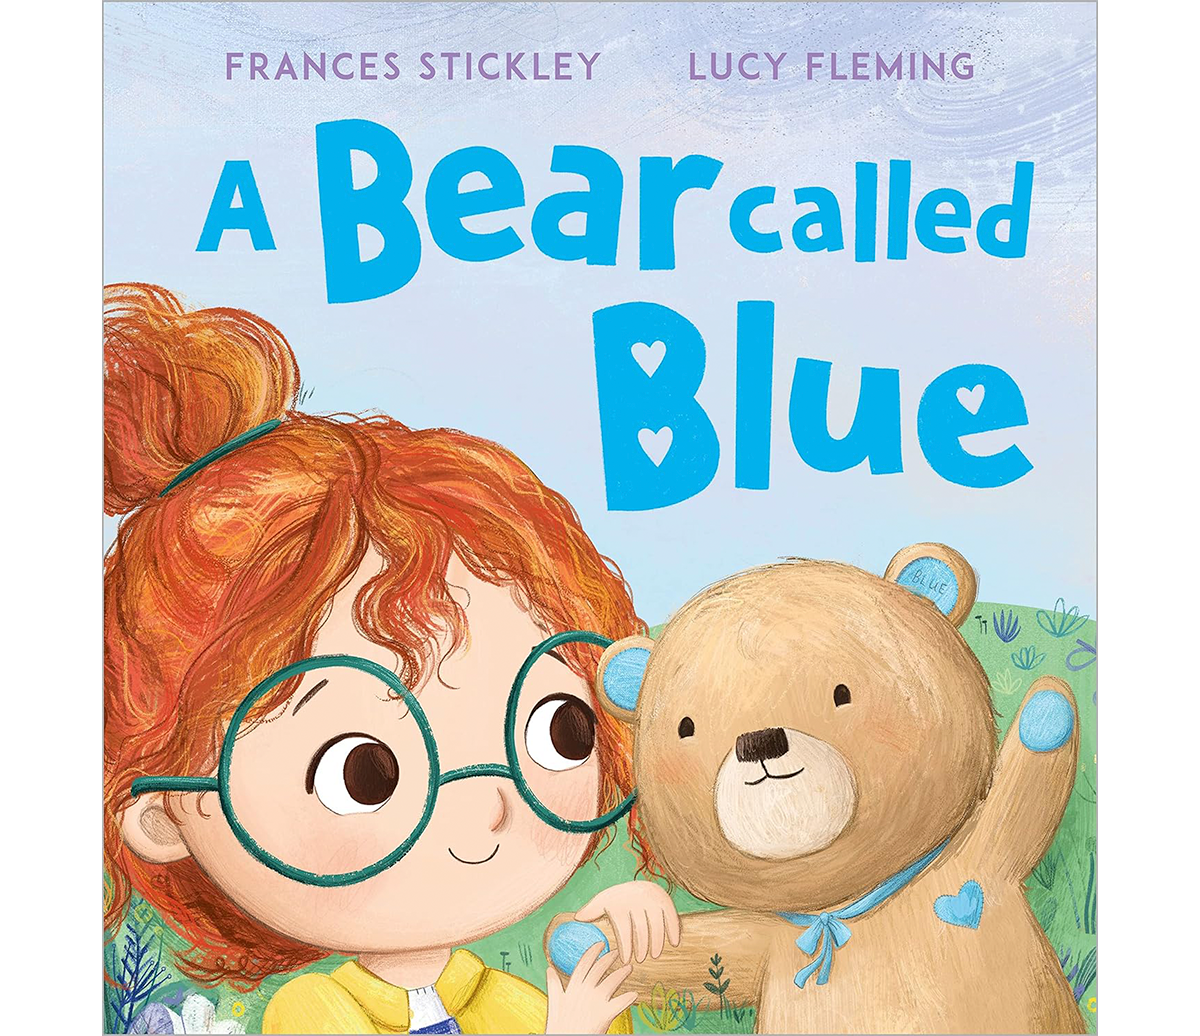 frances-stickley-a-bear-called-blue.png